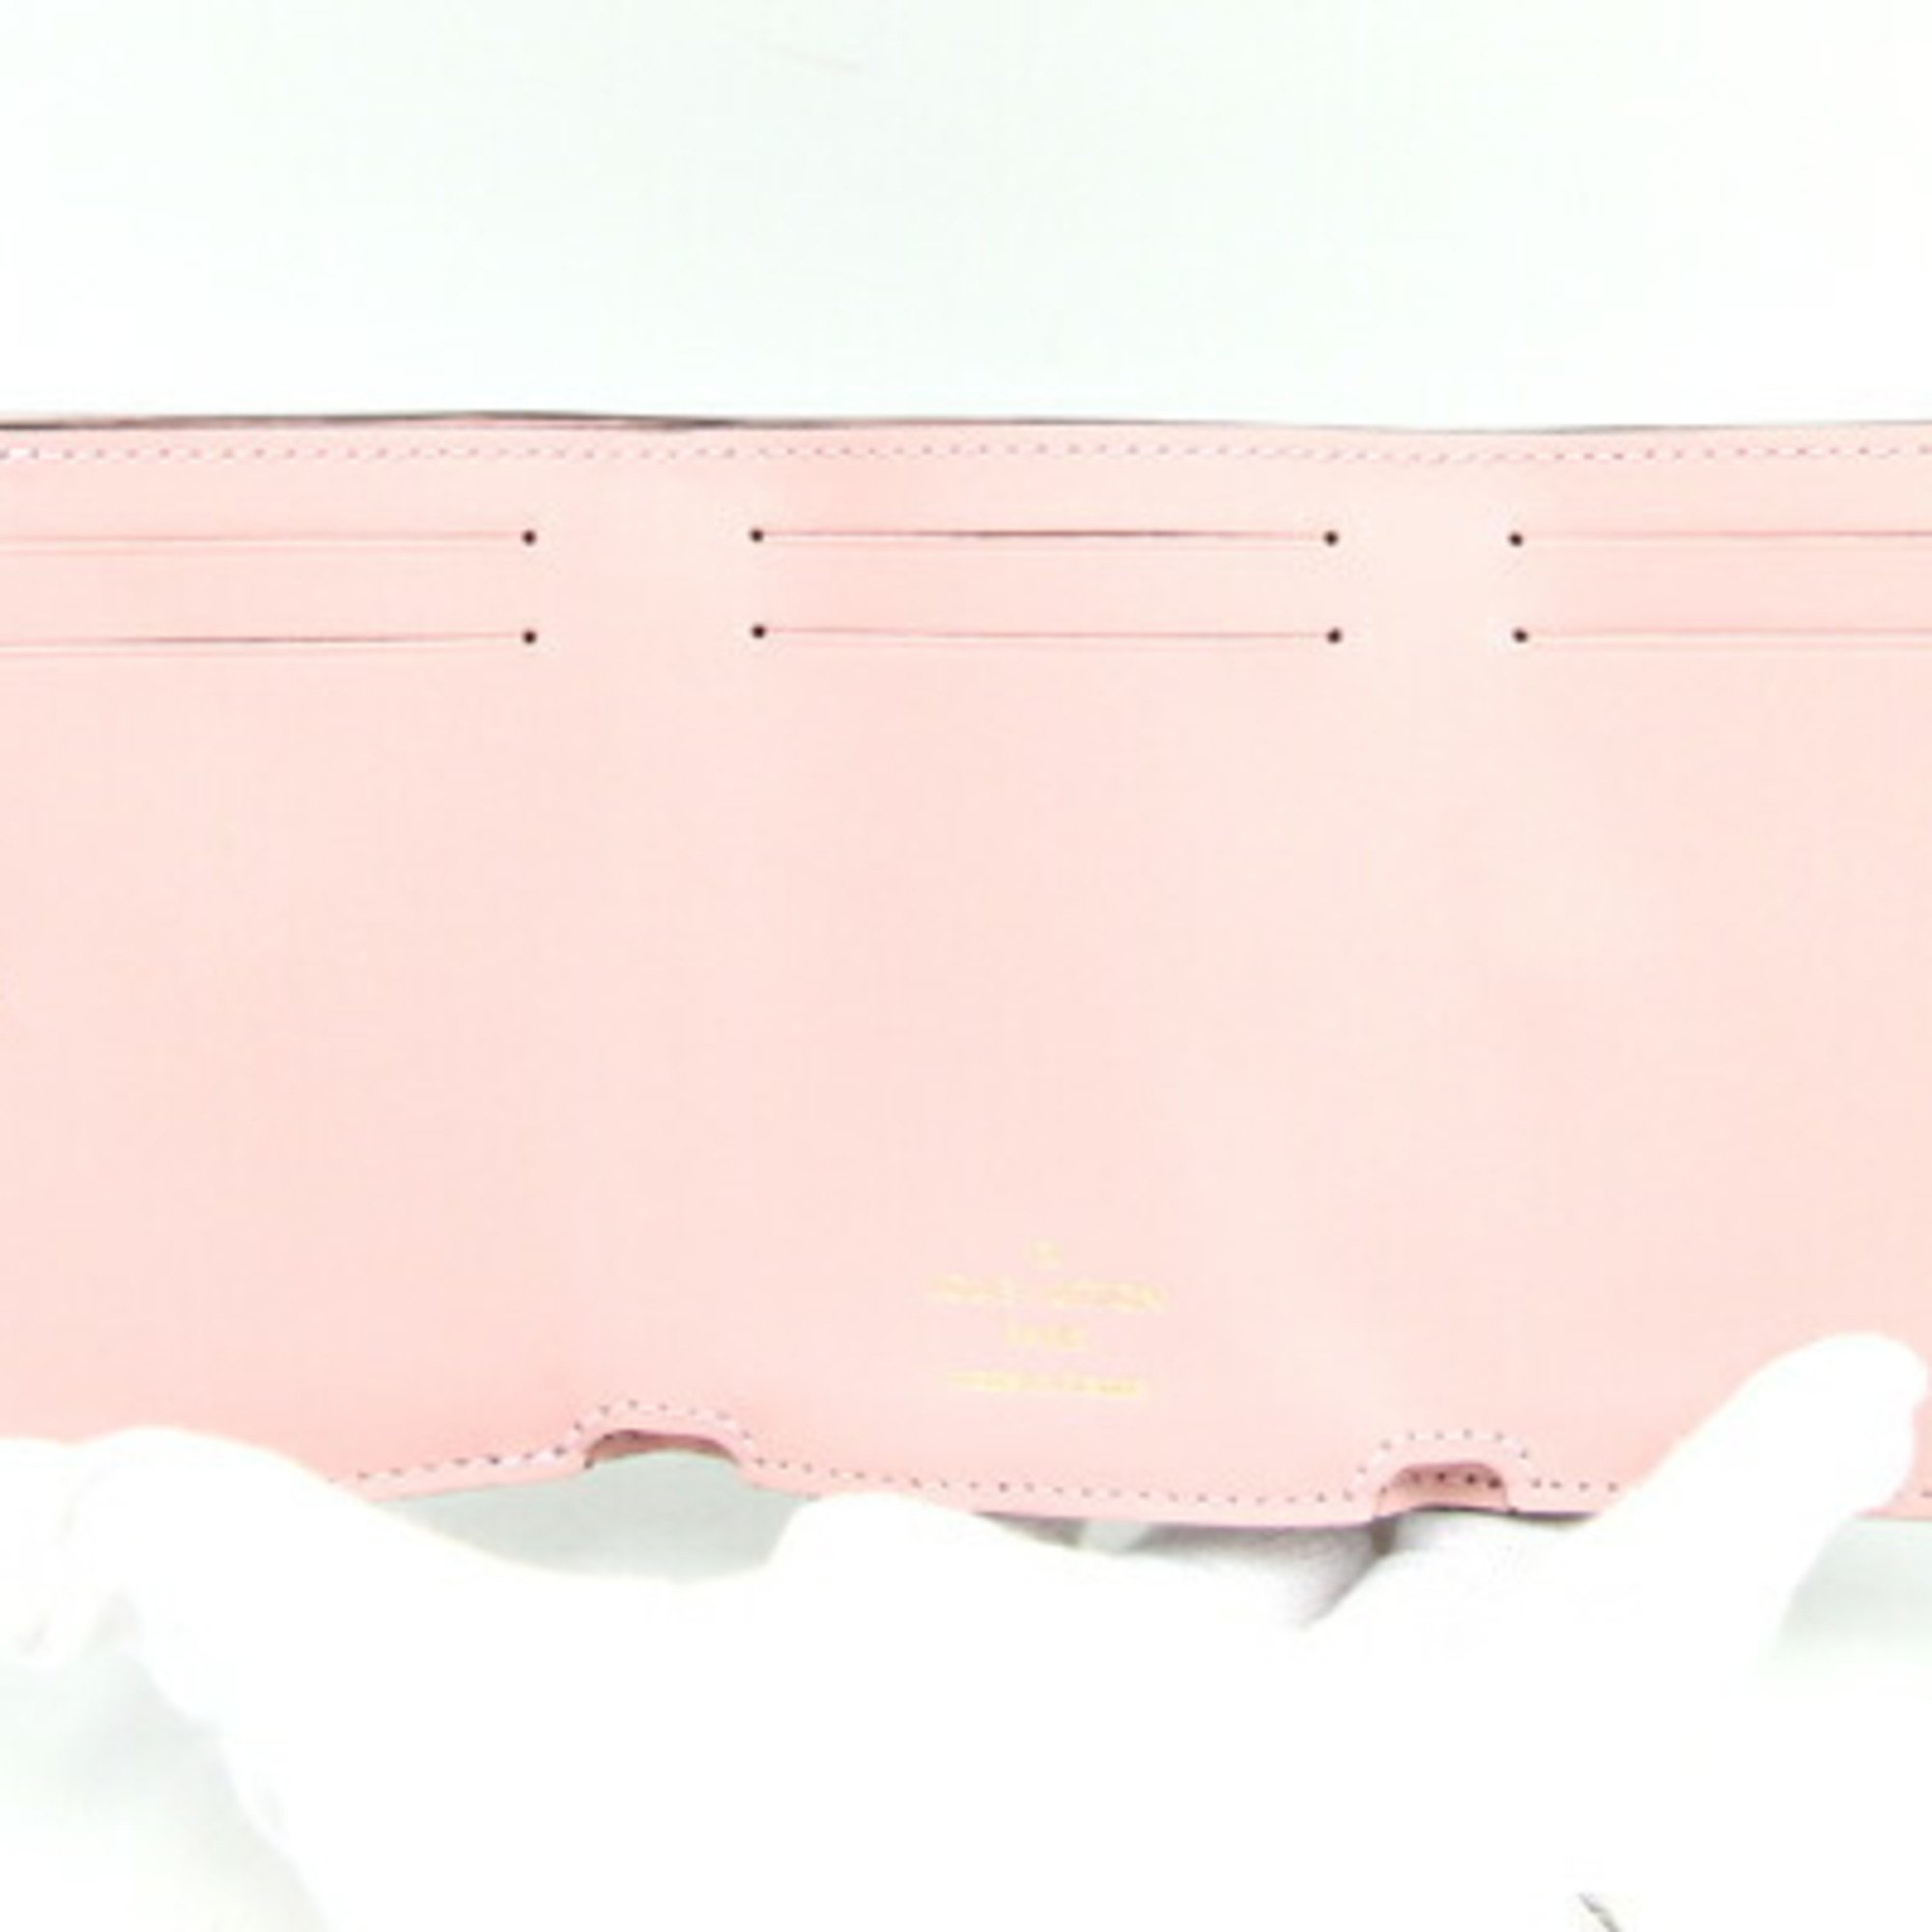 Louis Vuitton Tri-fold Wallet Monogram Portefeuille Celeste M81665 Rose Ballerine Compact Small Pink Women's LOUIS VUITTON